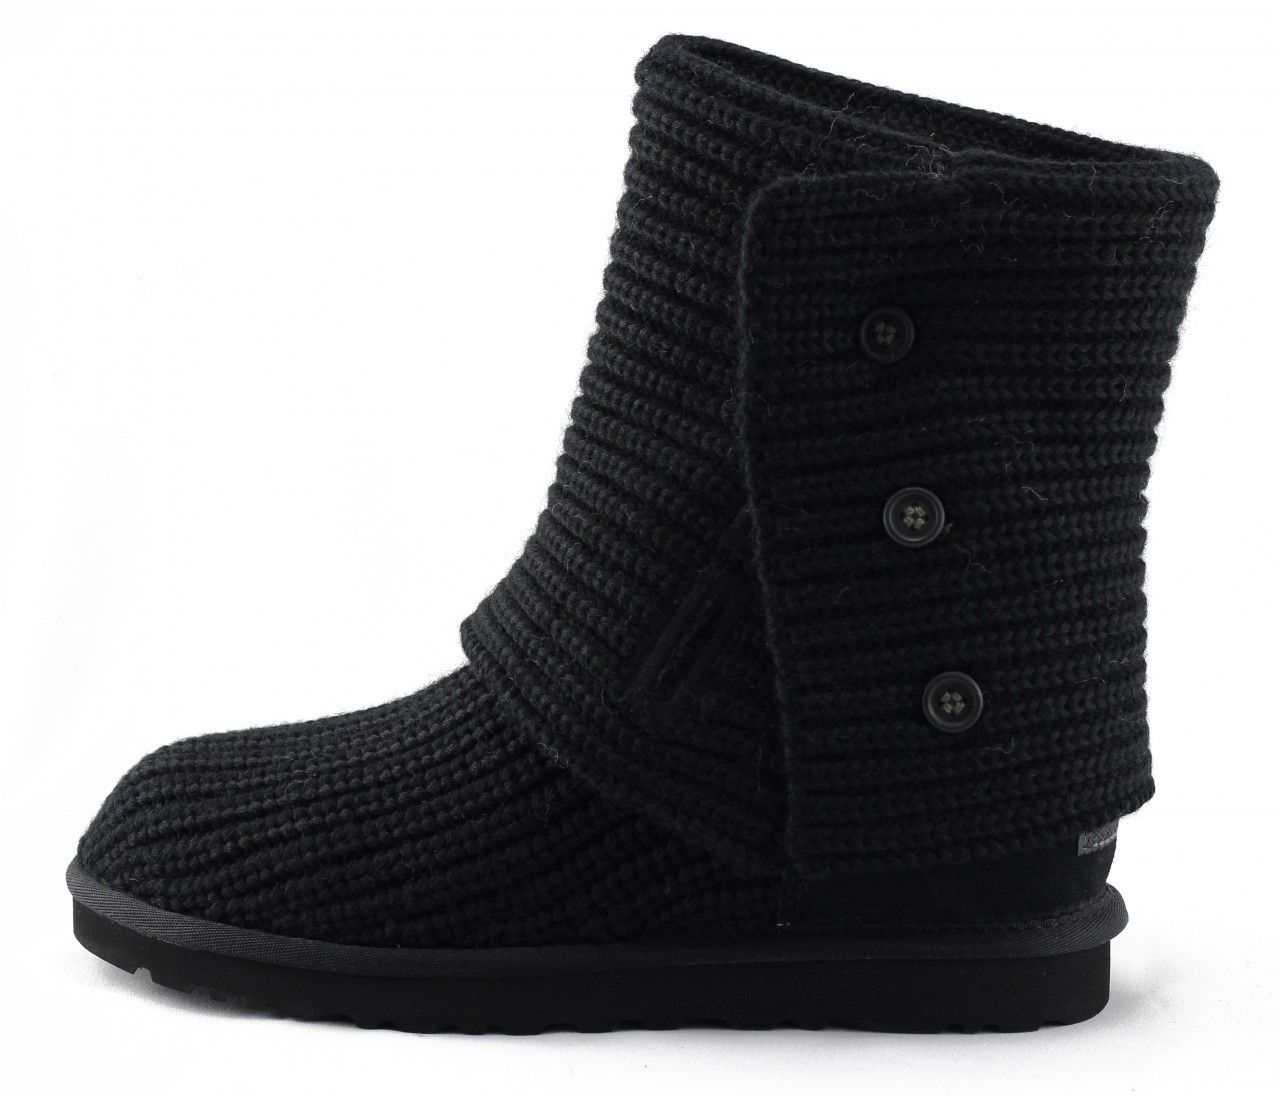 UGG Australia Cardy Black Boots 5819 BLK - Shiekh